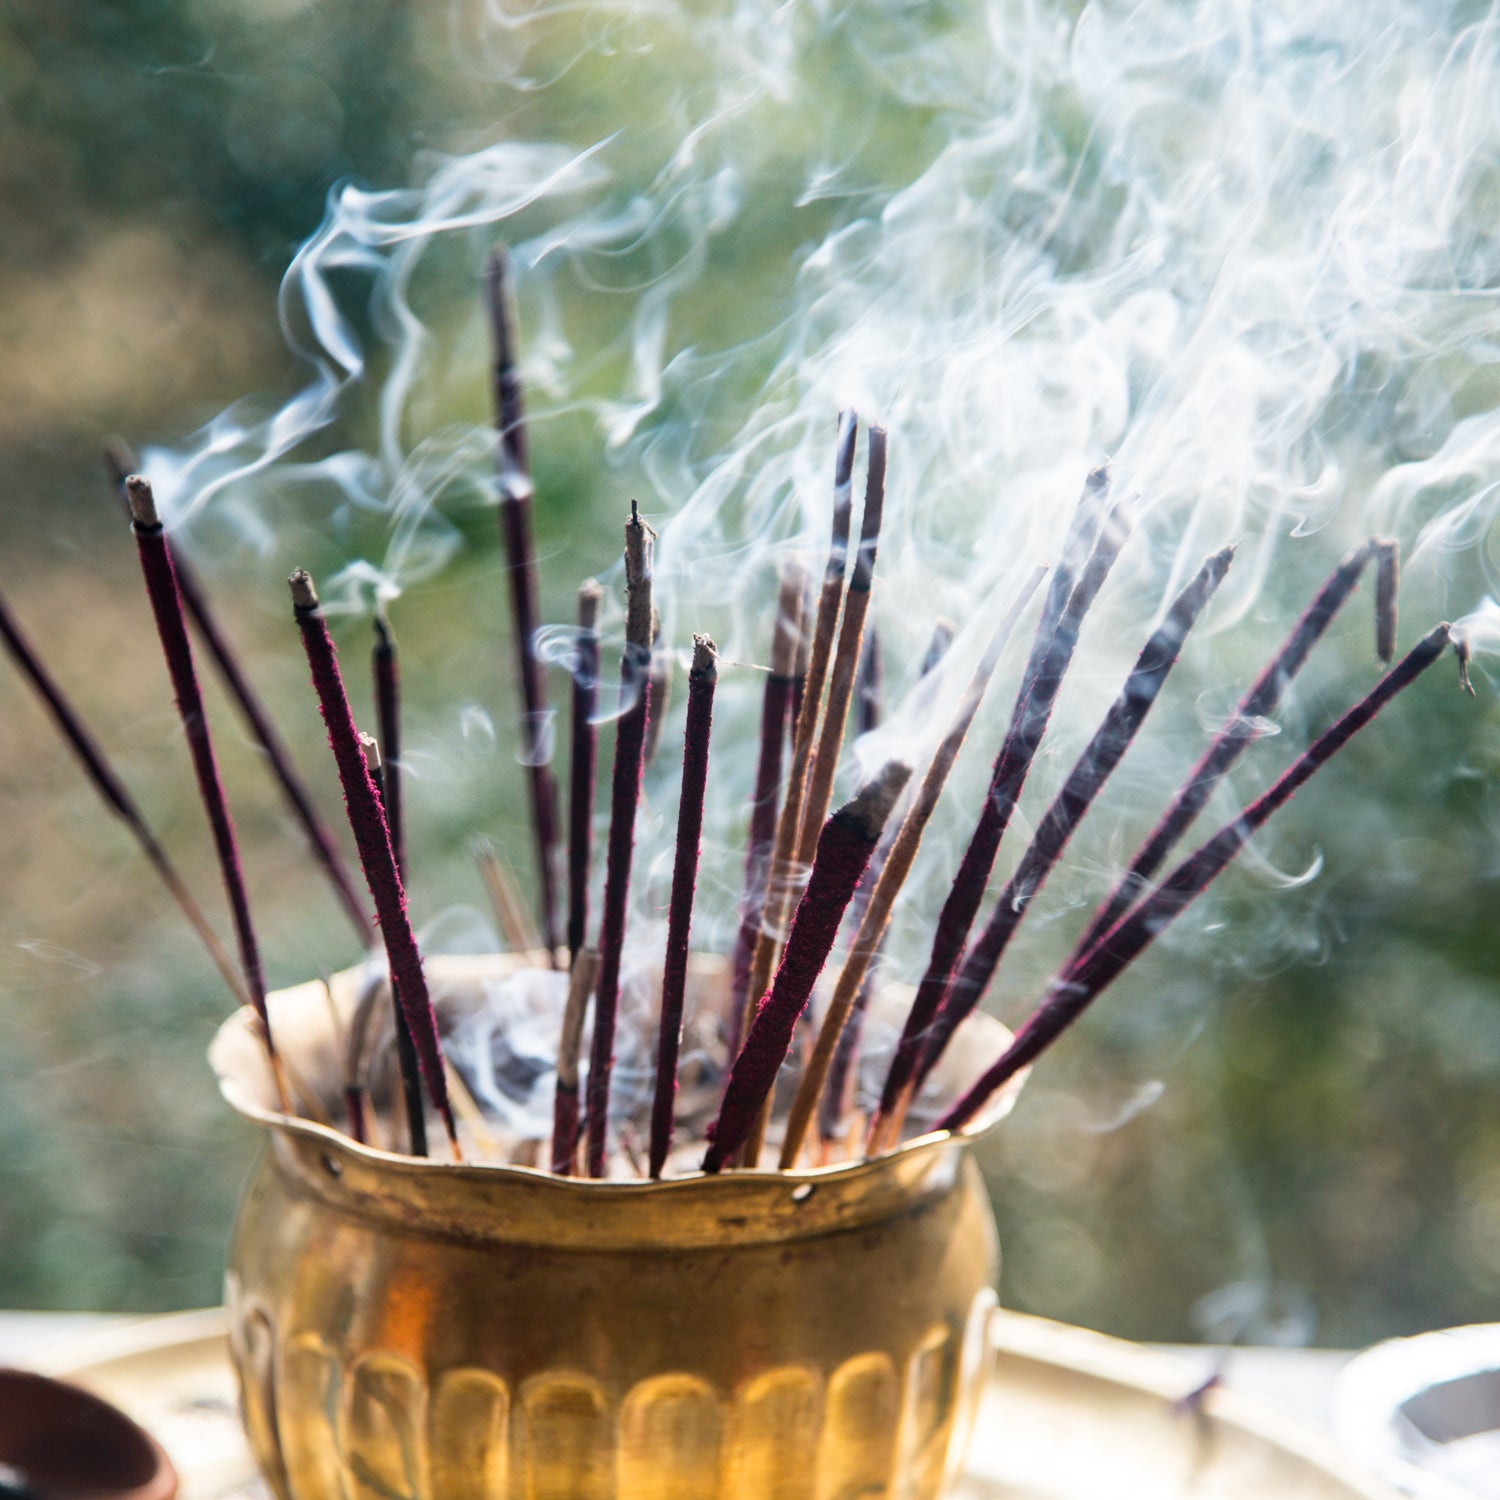 Burning sandalwood incense - the inspiration for this fragrance